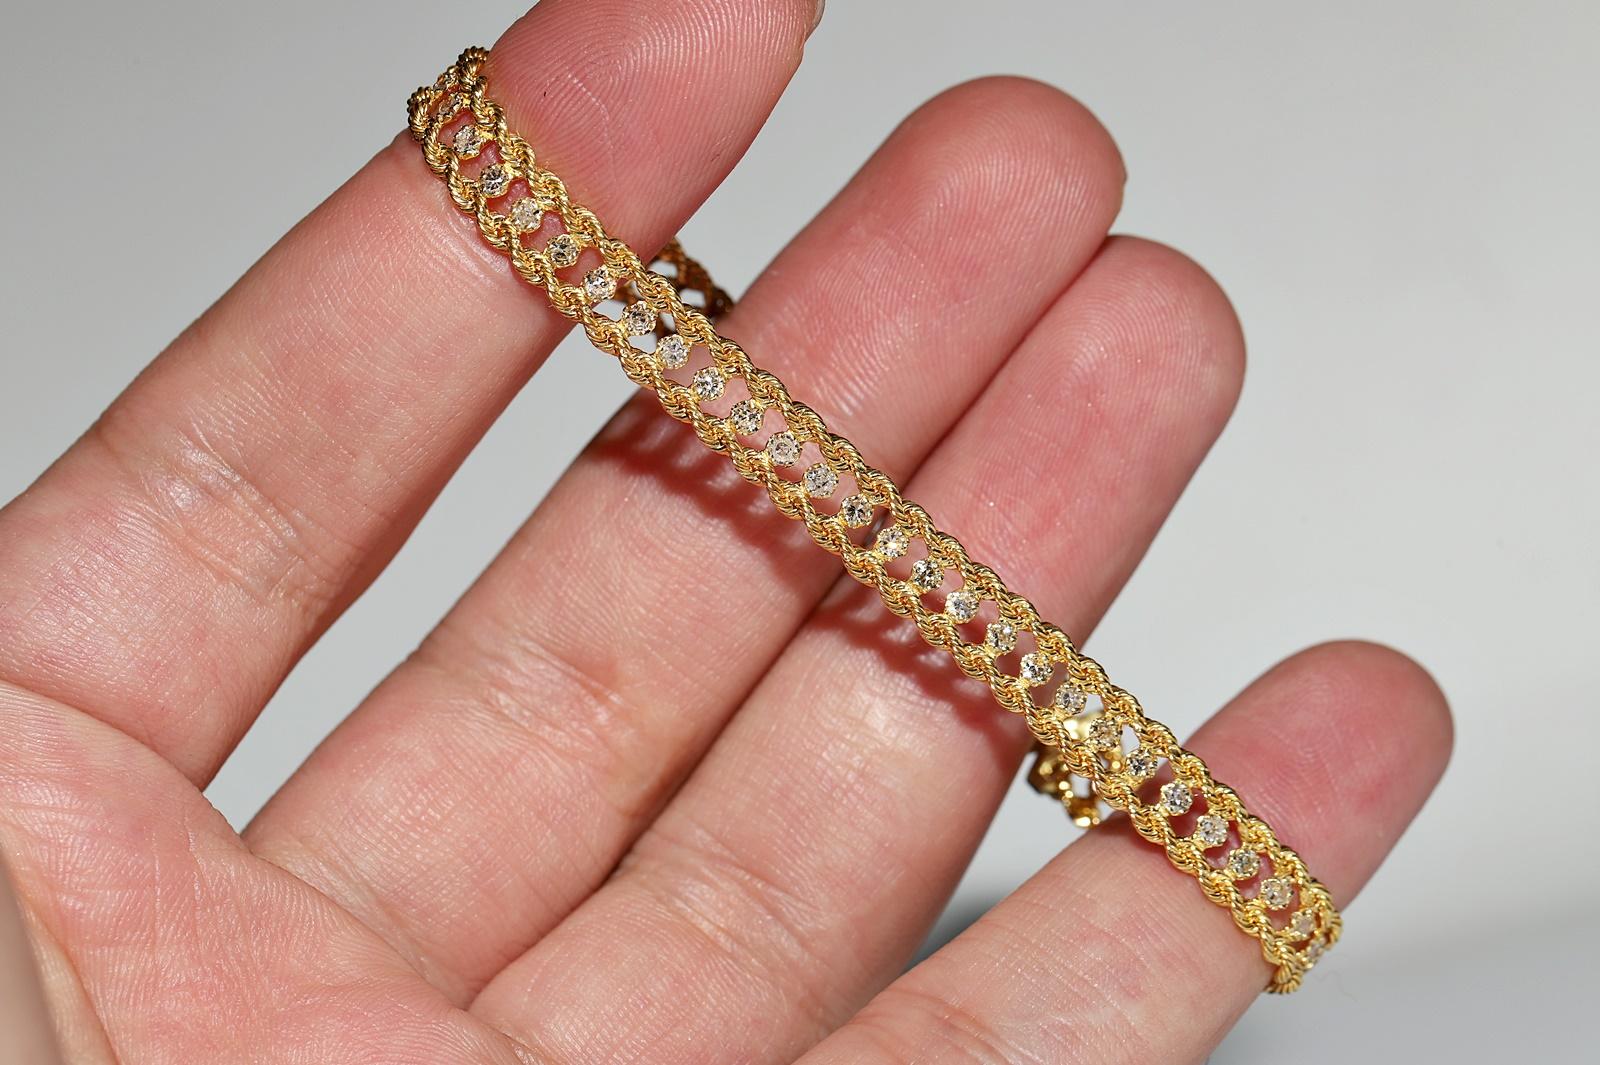 Vintage Circa 1980s 18k Gold Natural Diamond Decorated Bracelet  For Sale 3